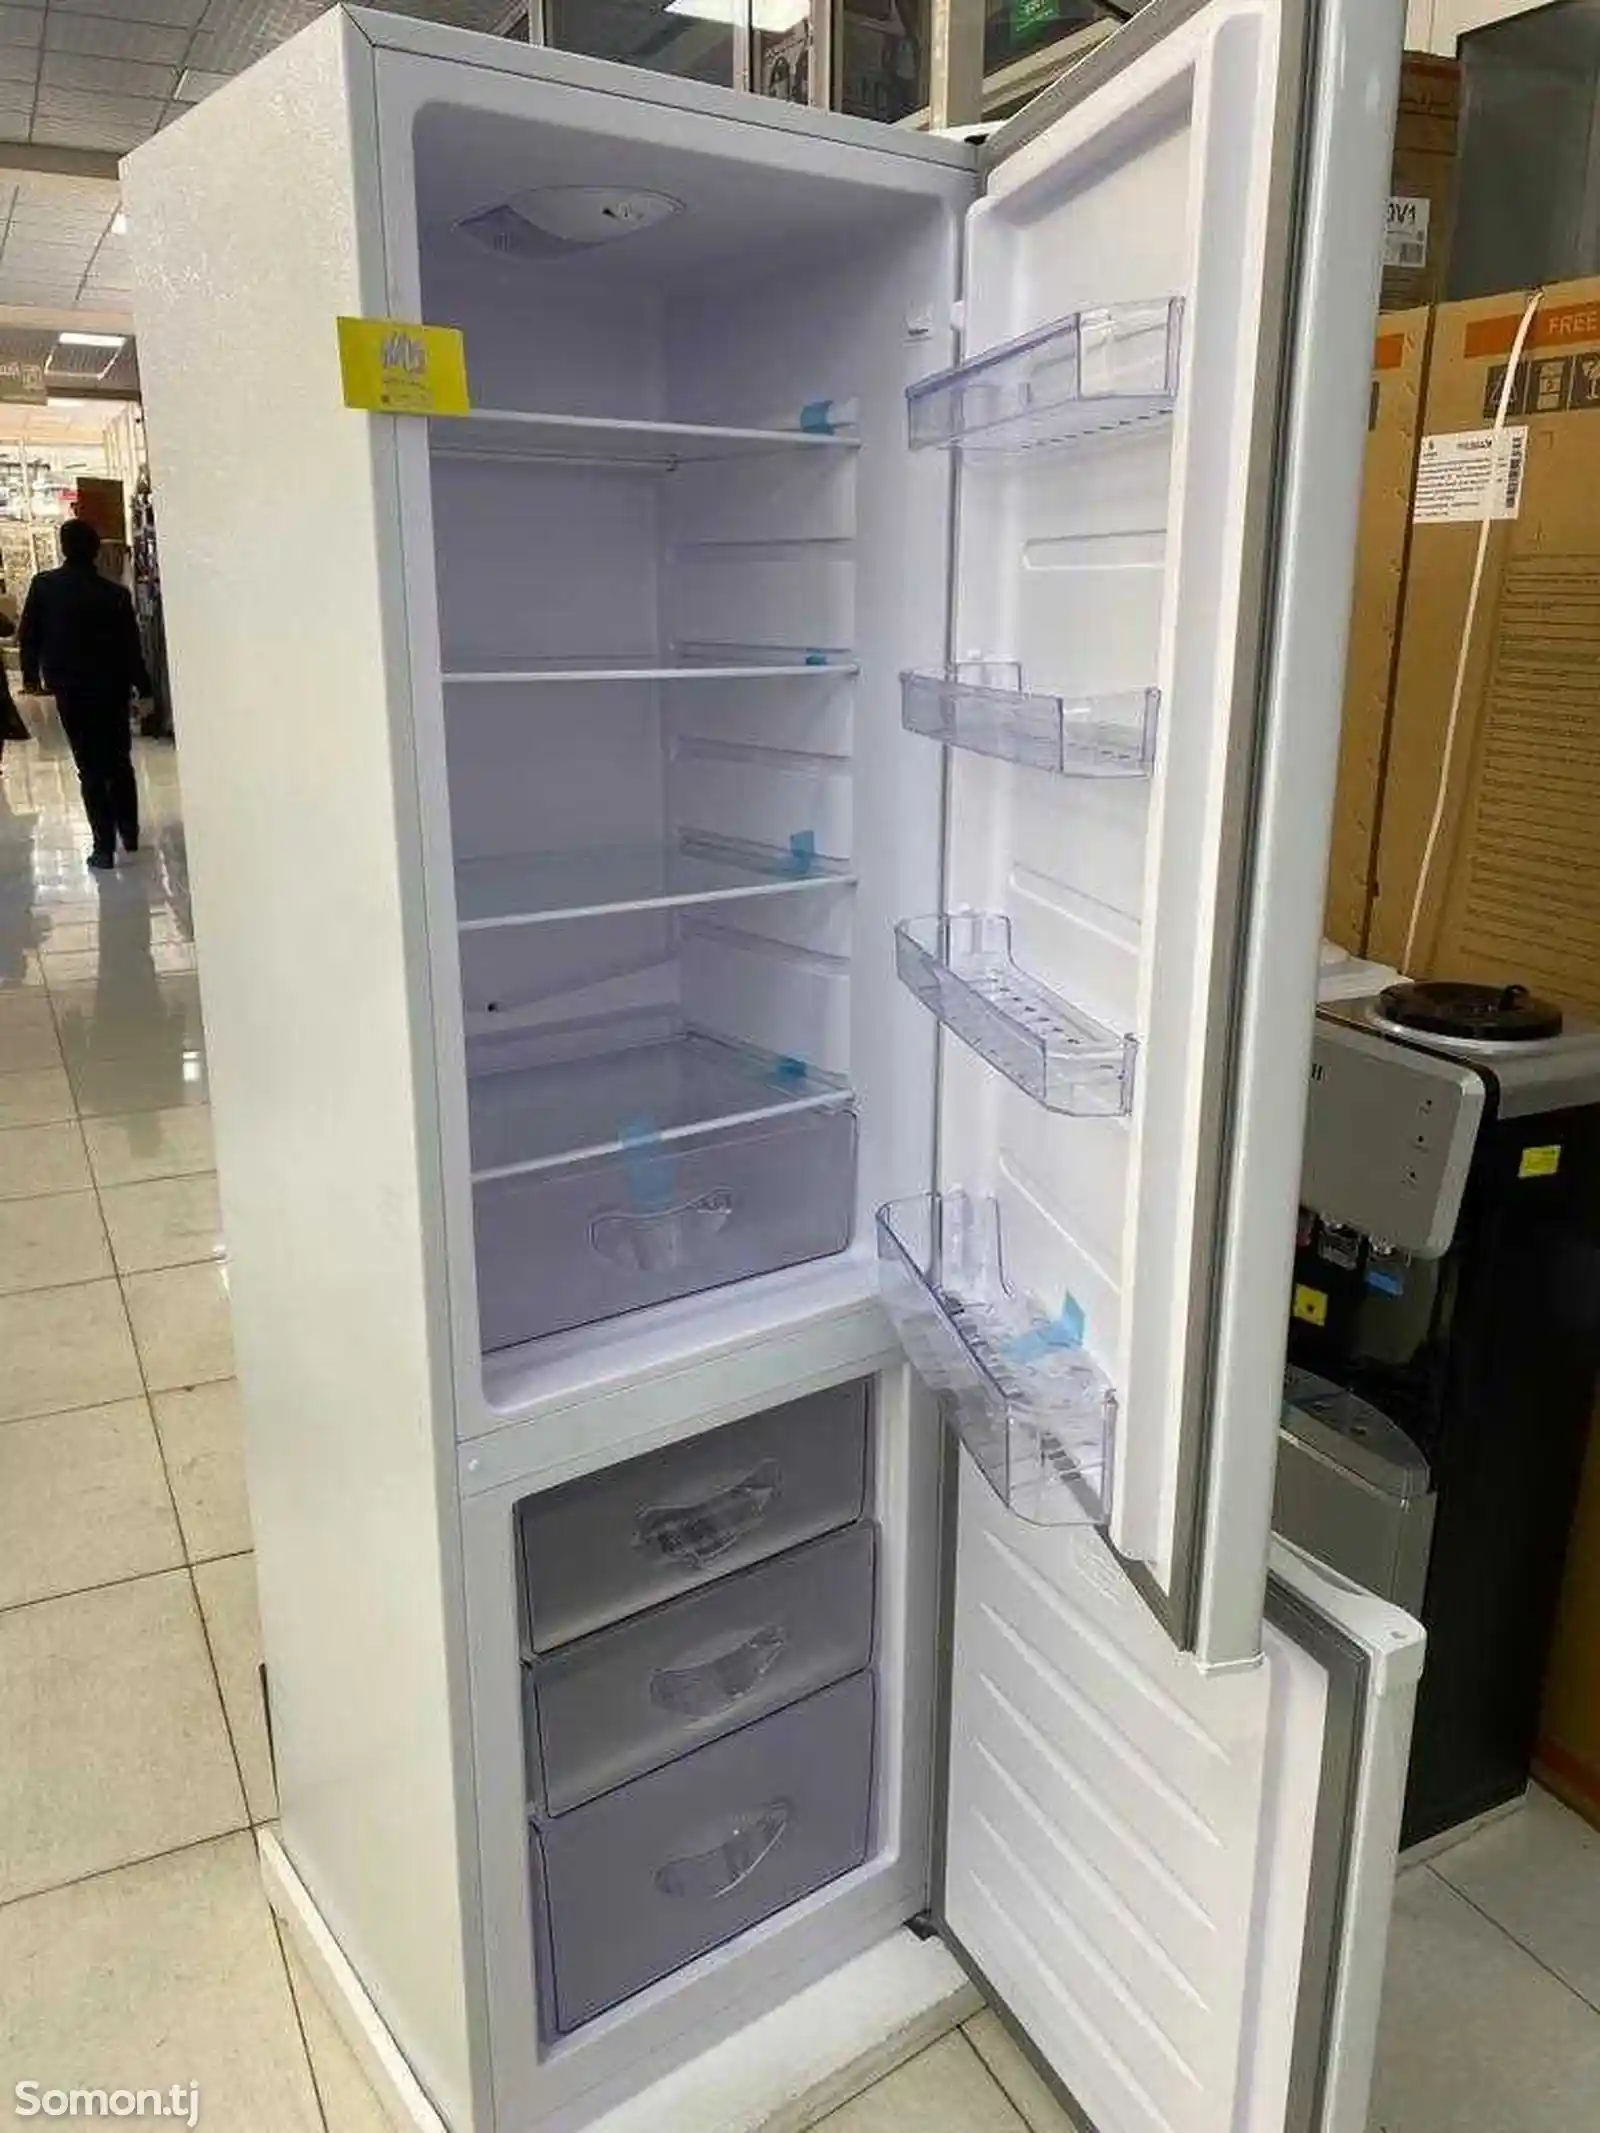 Холодильник Ferre-3